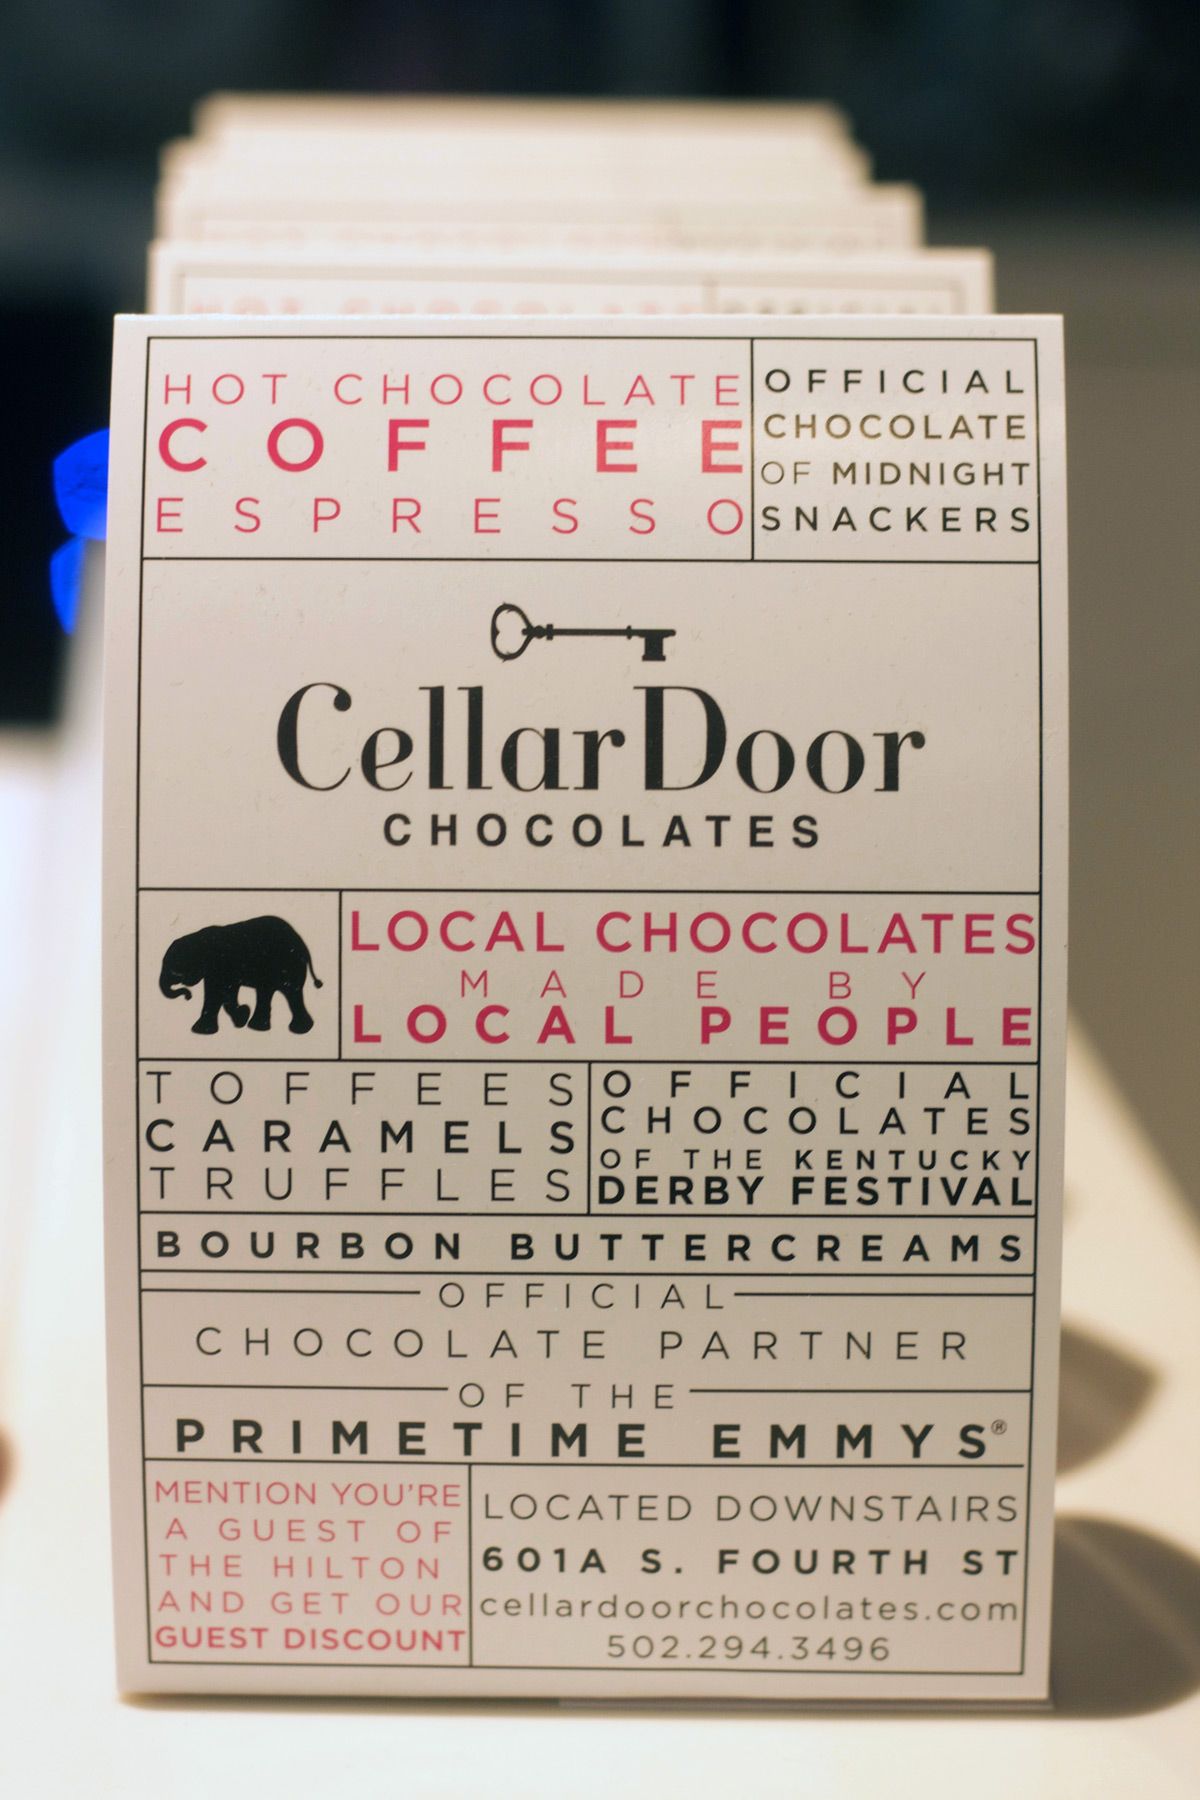 Cellar Door Chocolates